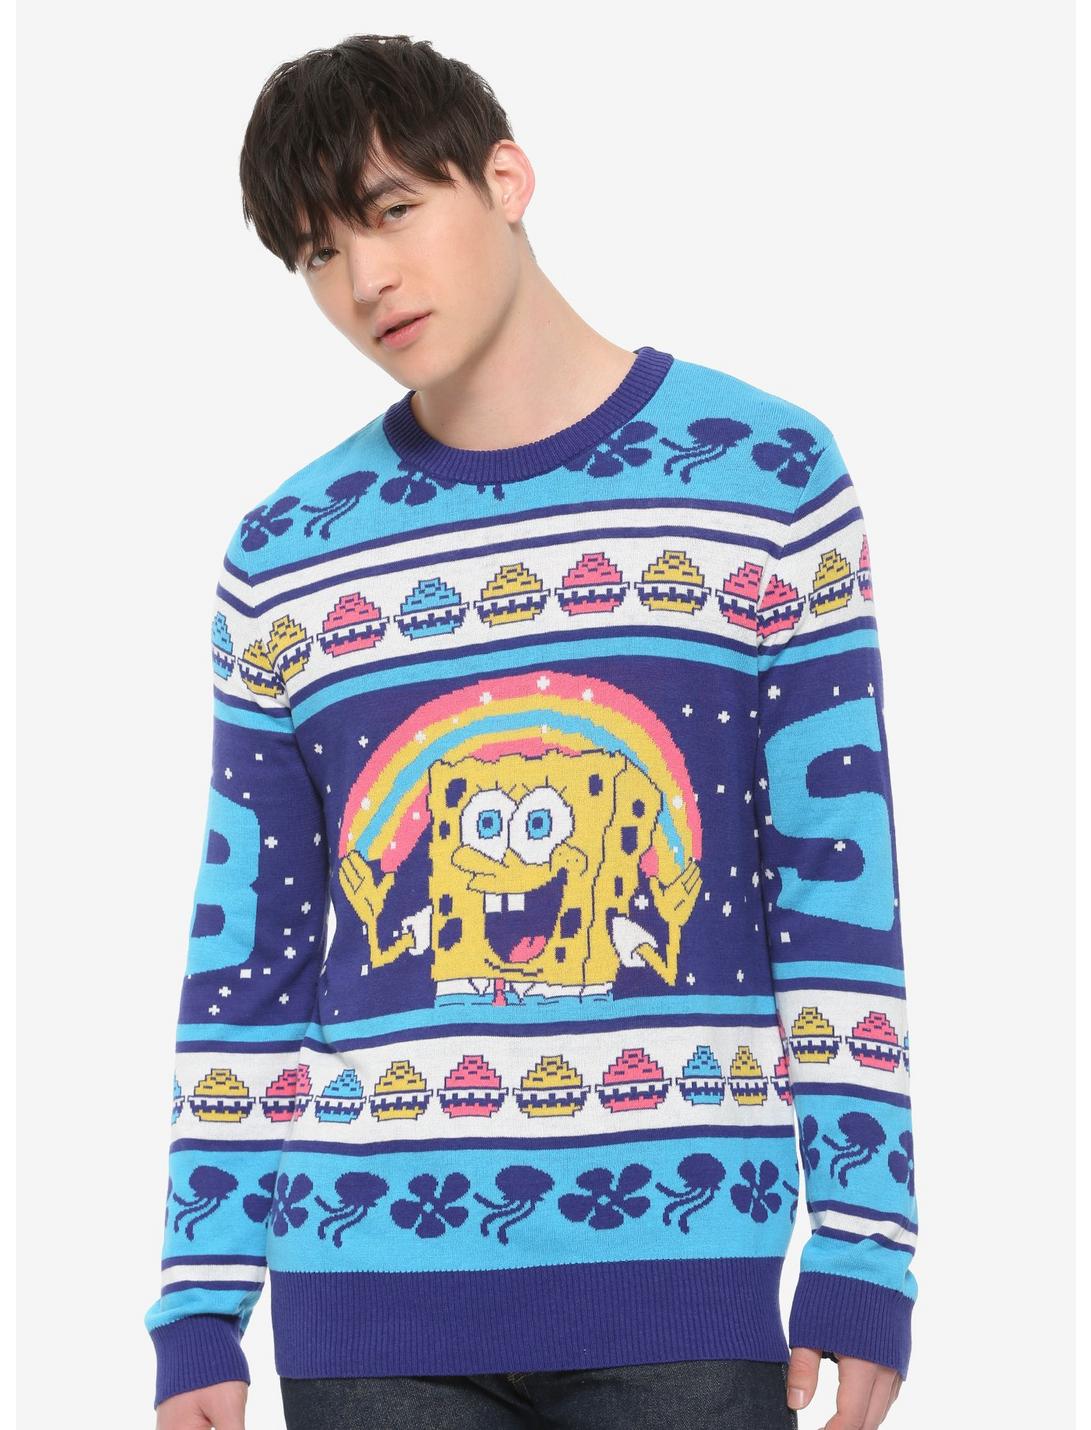 SpongeBob SquarePants Krabby Patty Holiday Sweater, MULTI, hi-res